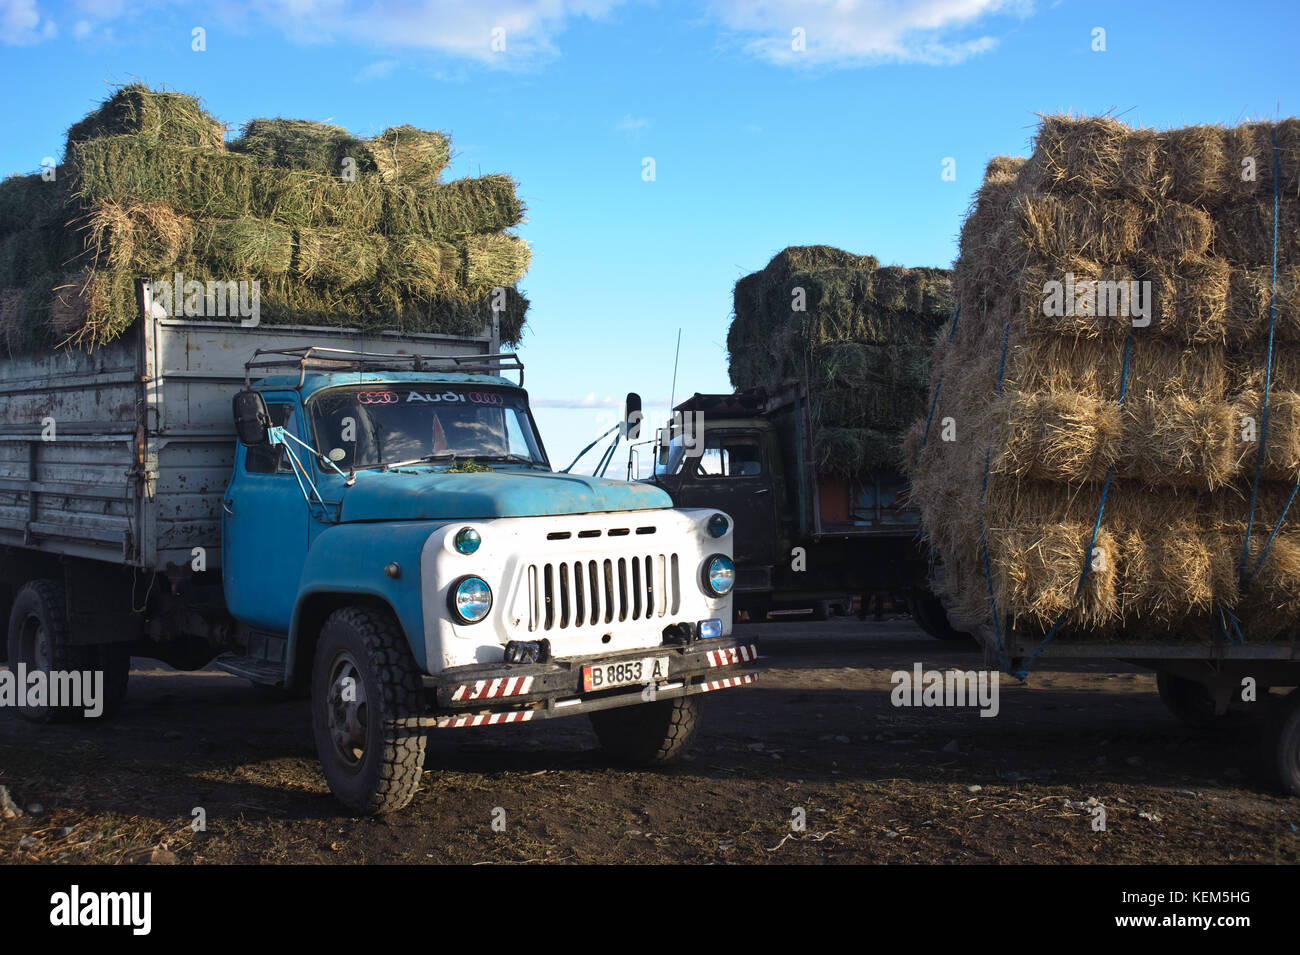 Trucks carrying fodder. The blue one is a Gaz 53 truck, Gaz being a soviet carmaker ( Kyrgyzstan). Stock Photo